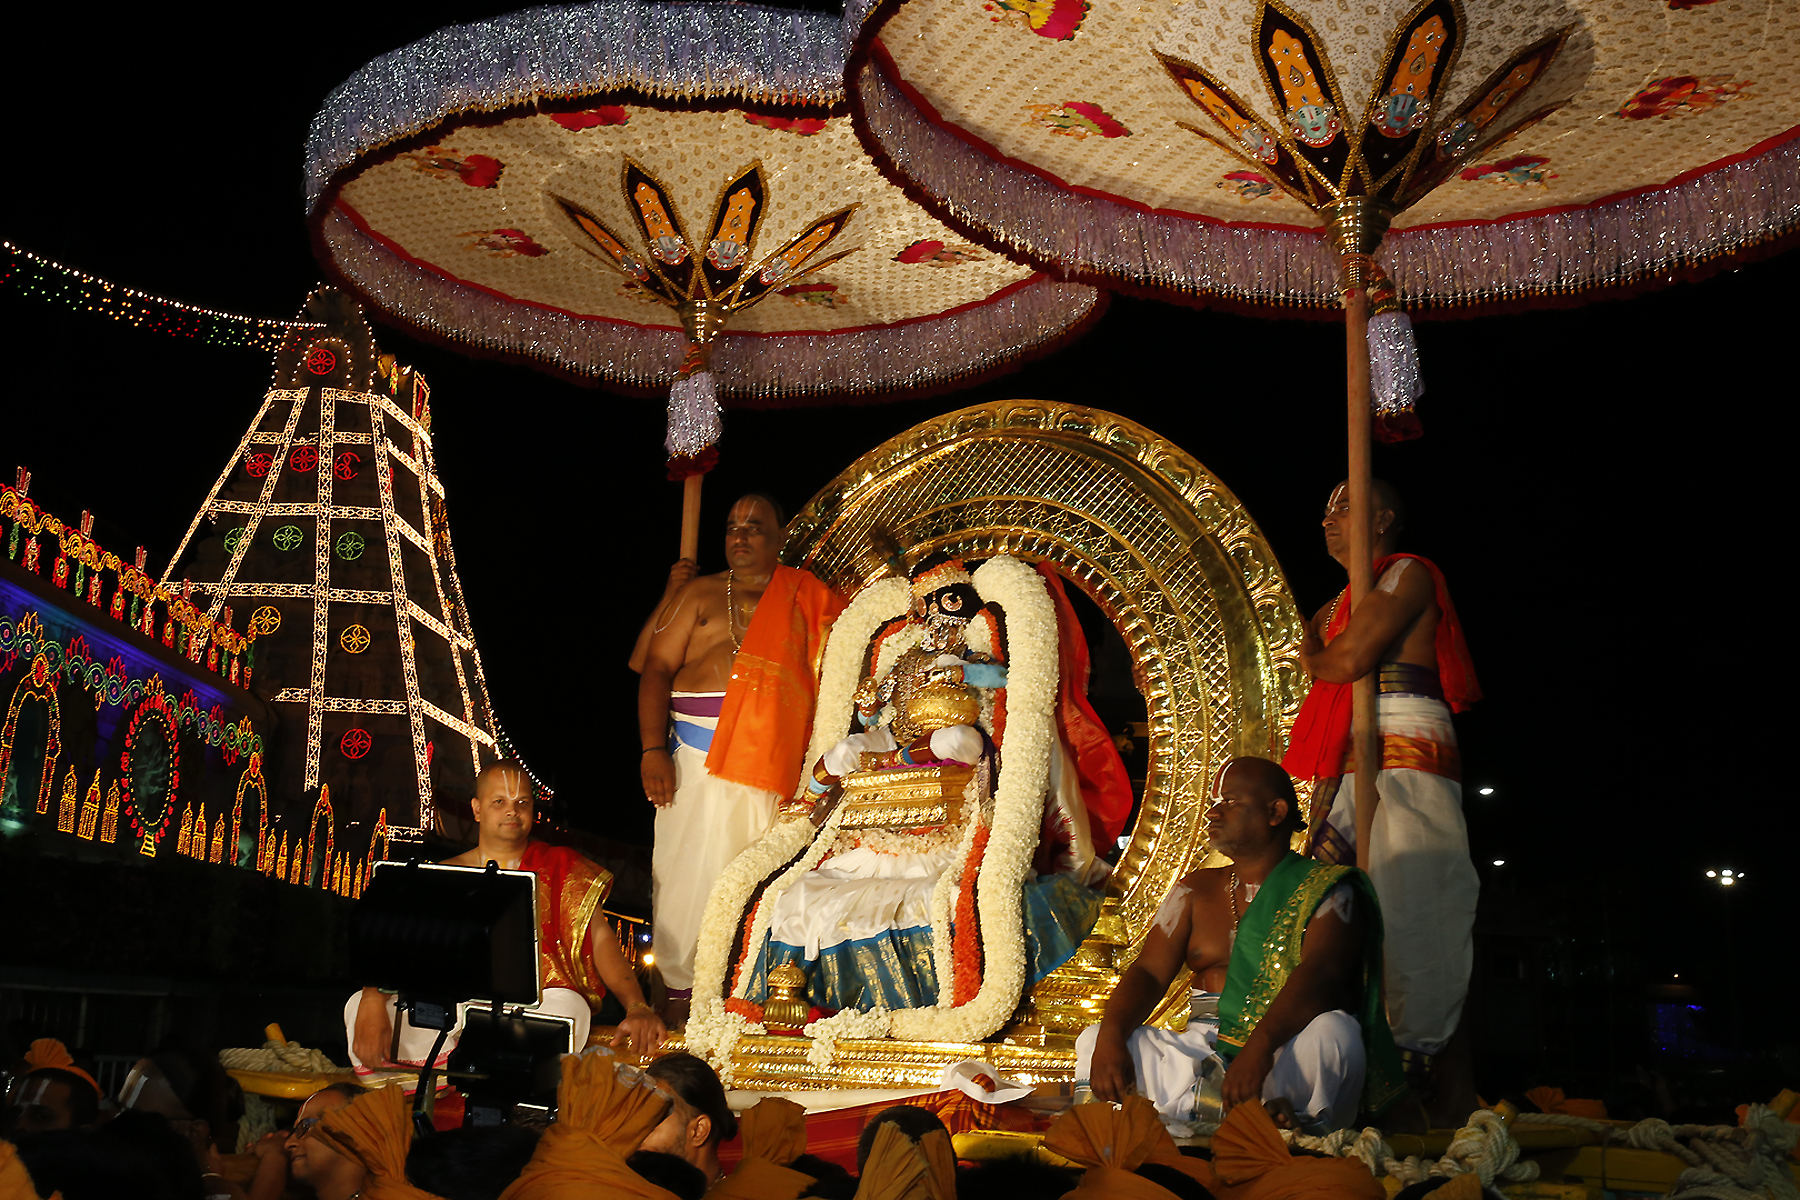 Gallery : చంద్రప్రభ వాహనంపై ఊరేగిన వేంకటేశుడు